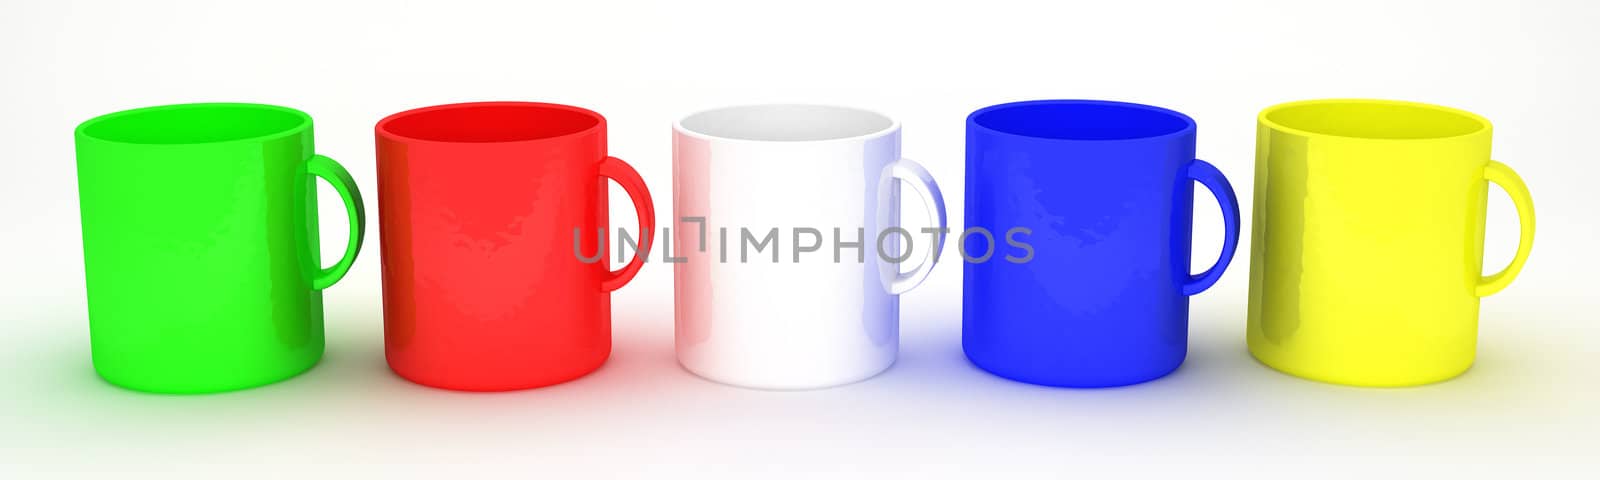 colorful blank mugs